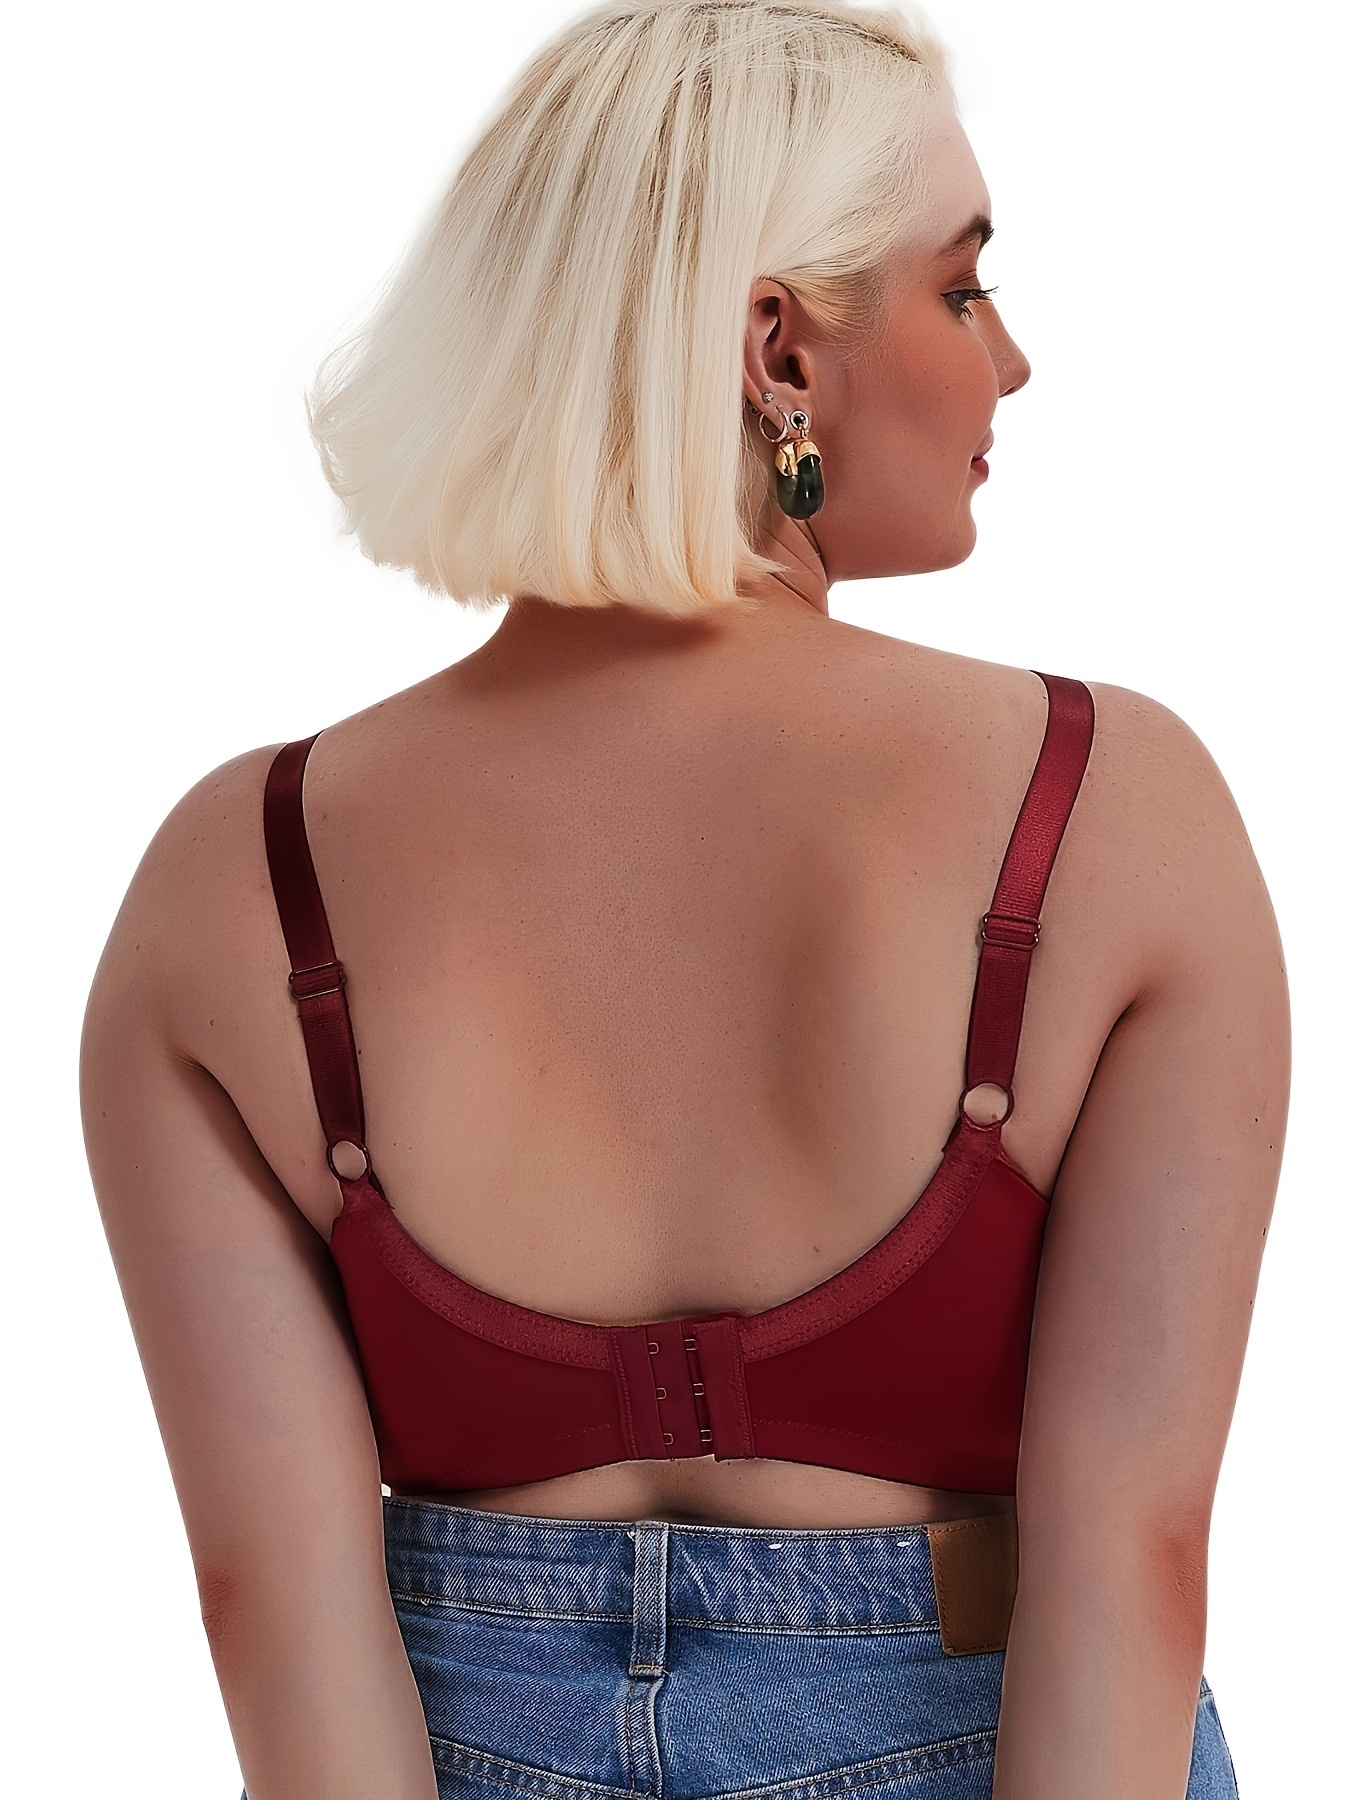 BESETFREE Women's Plus Size Lace Bra Full Coverage Unpadded Bra